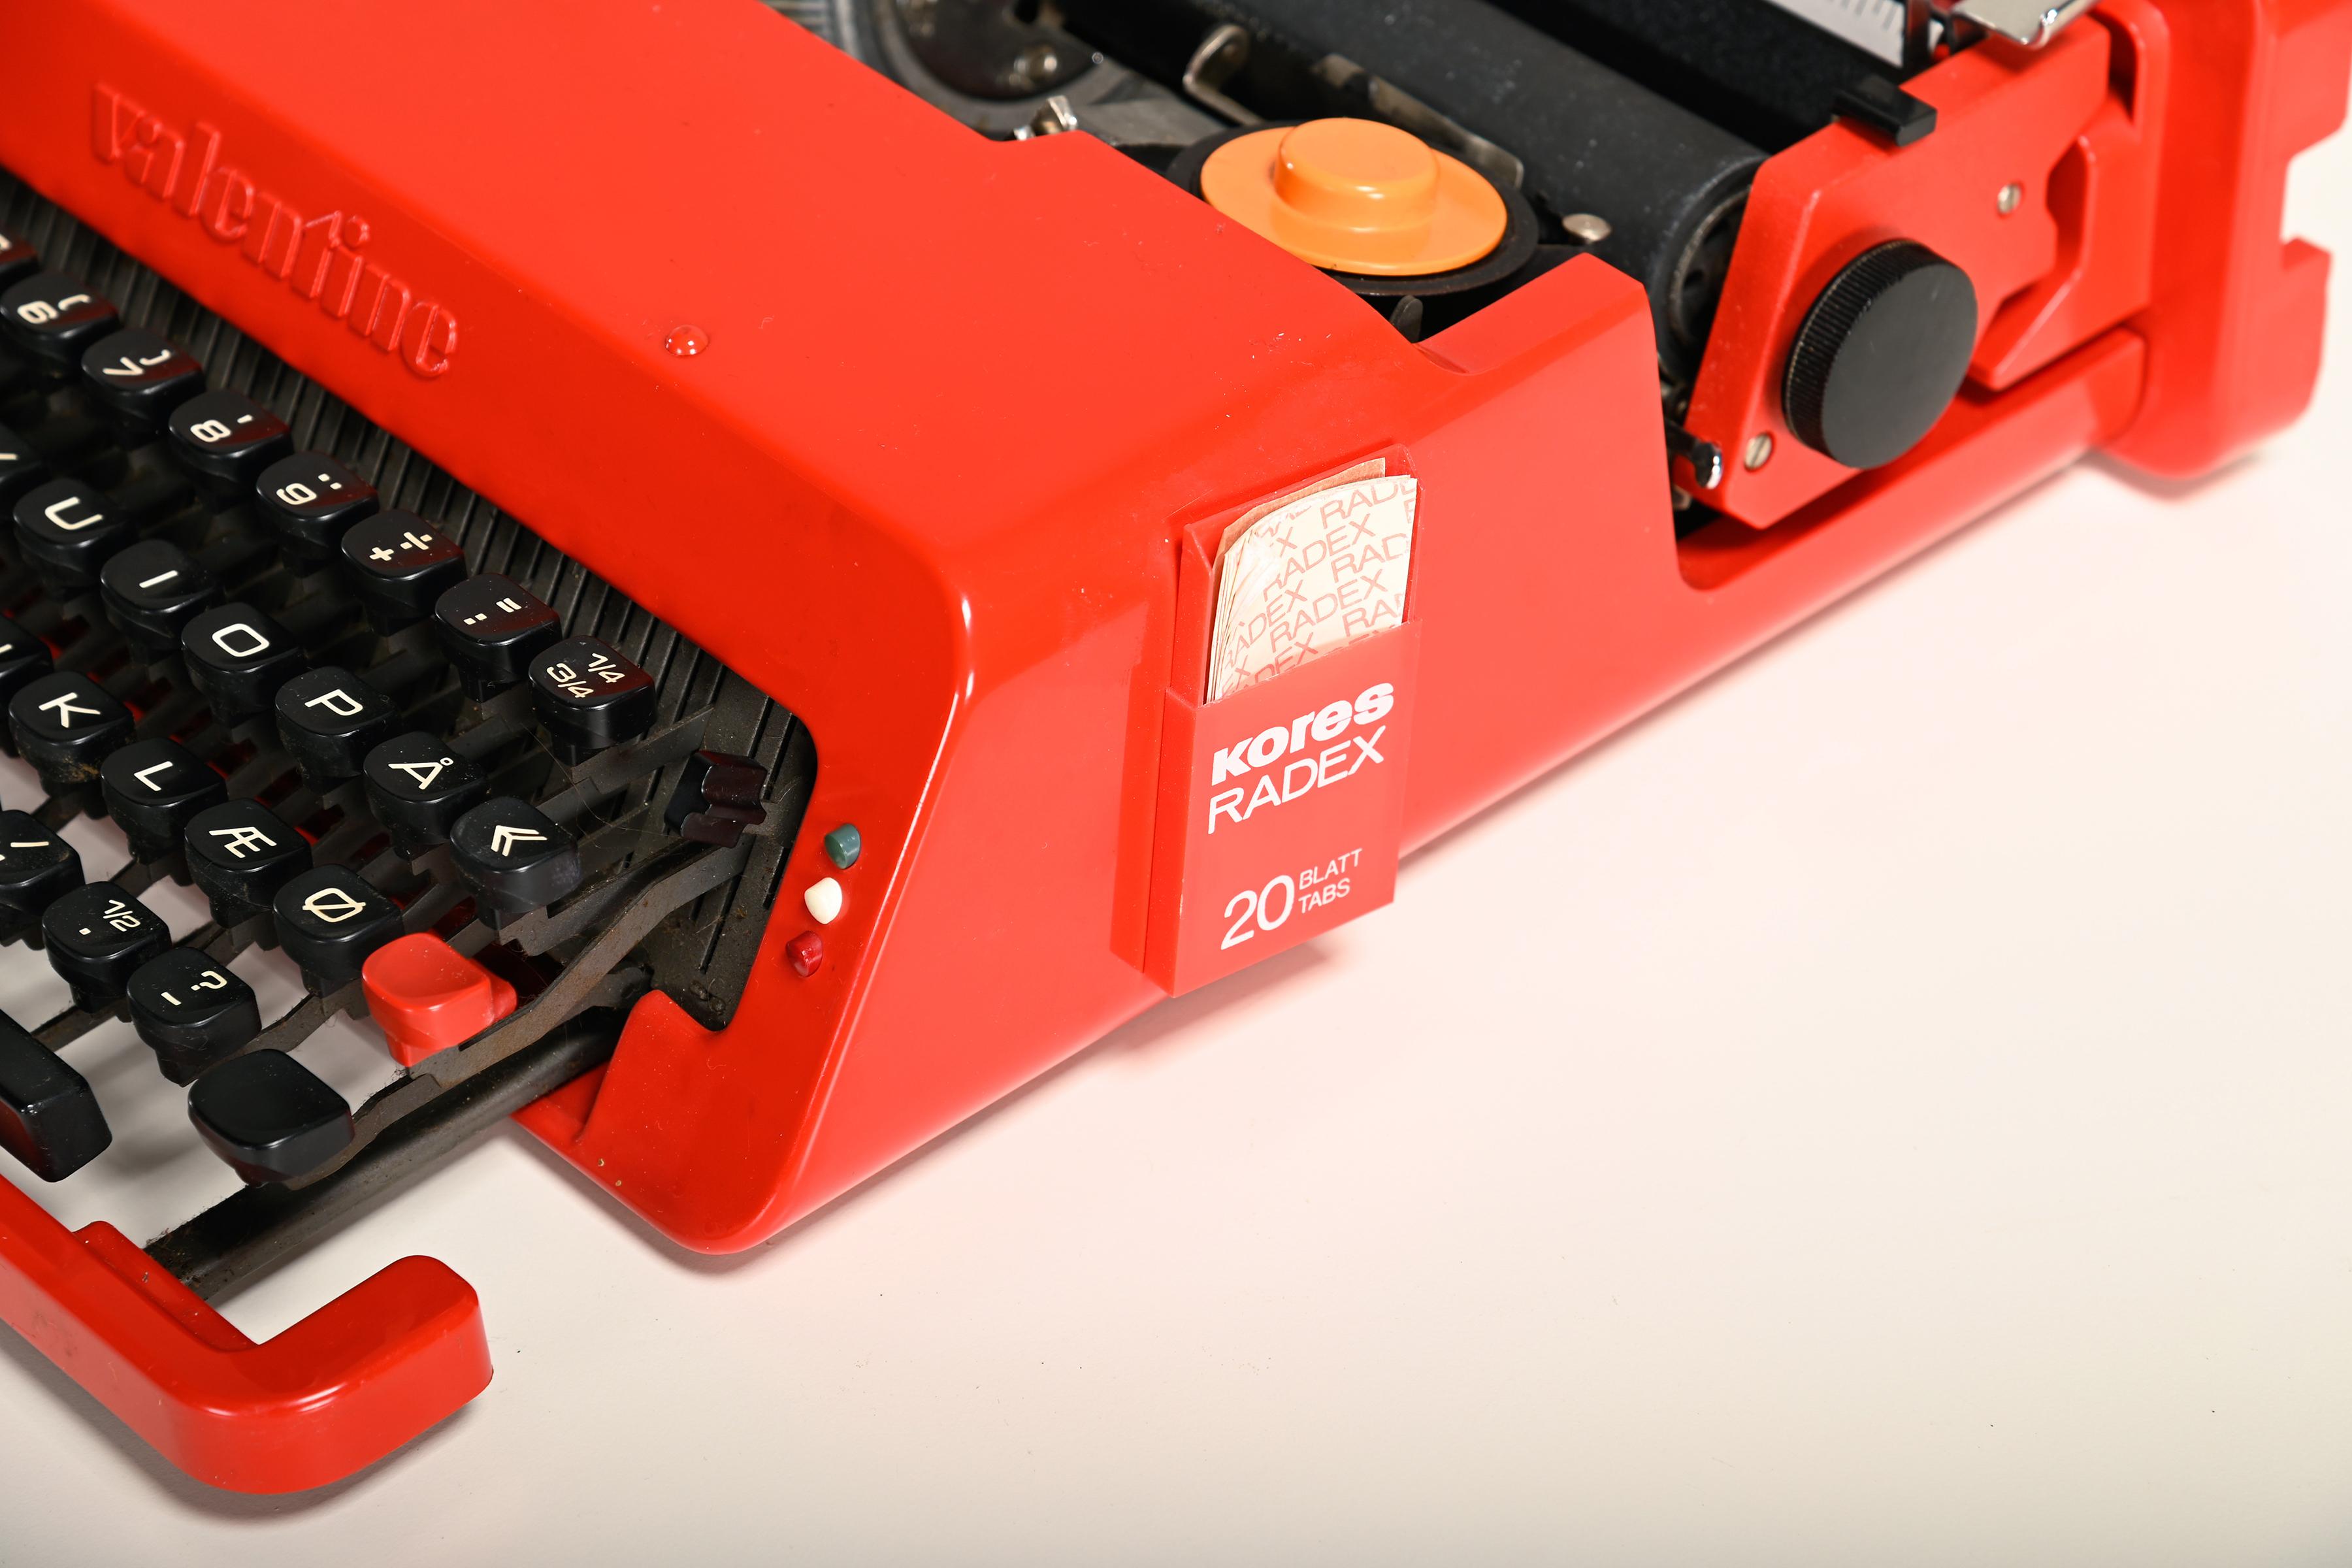 Ettore Sottsass red Valentine Typewriter for Olivetti, Italy 1